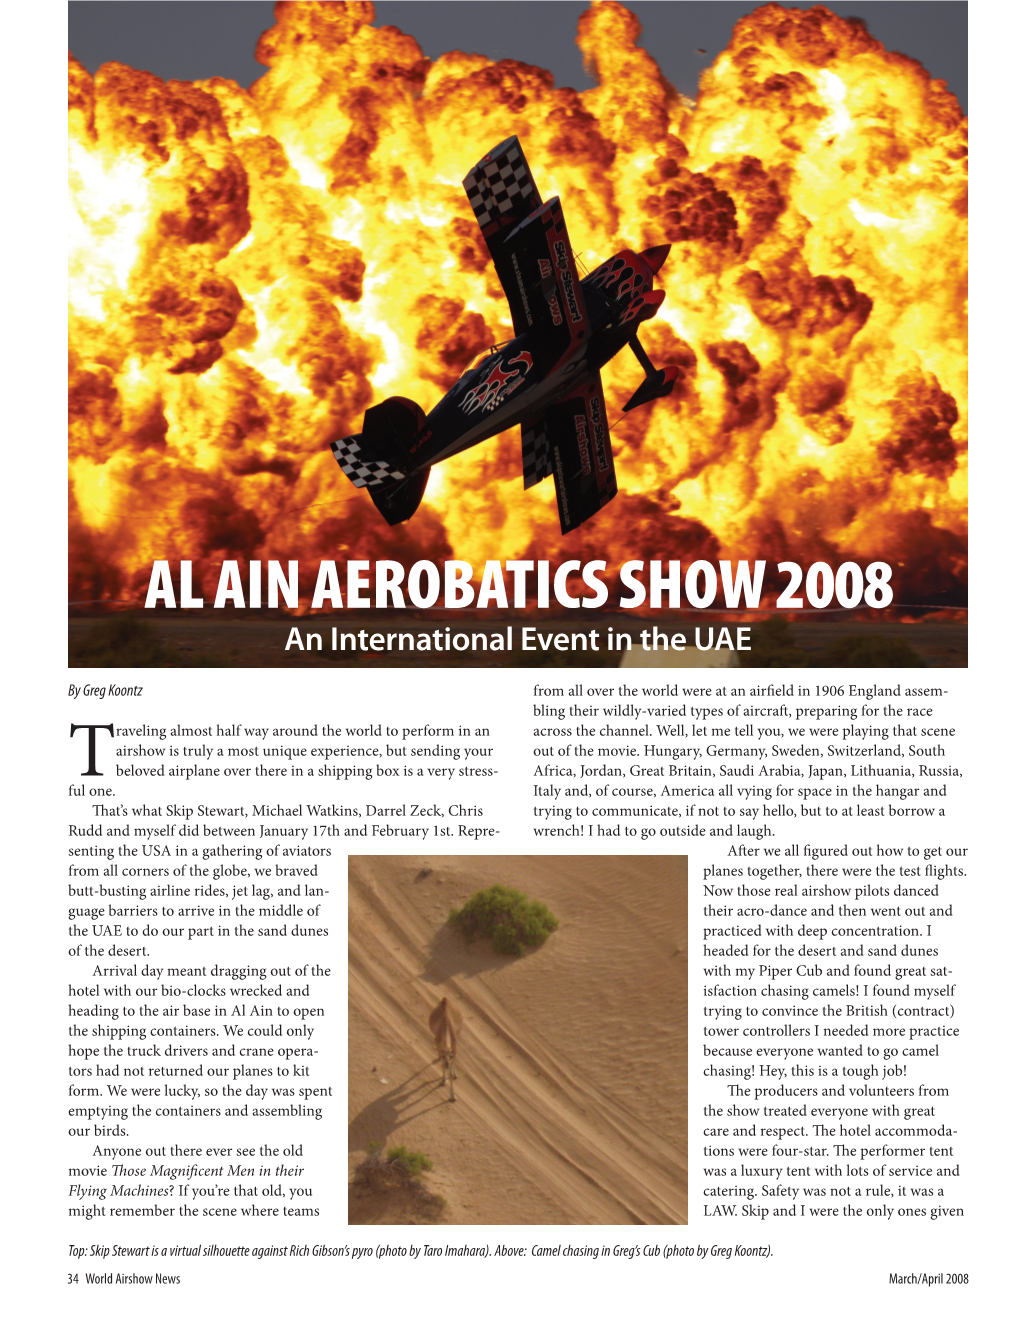 AL AIN AEROBATICS SHOW 2008 an International Event in the UAE